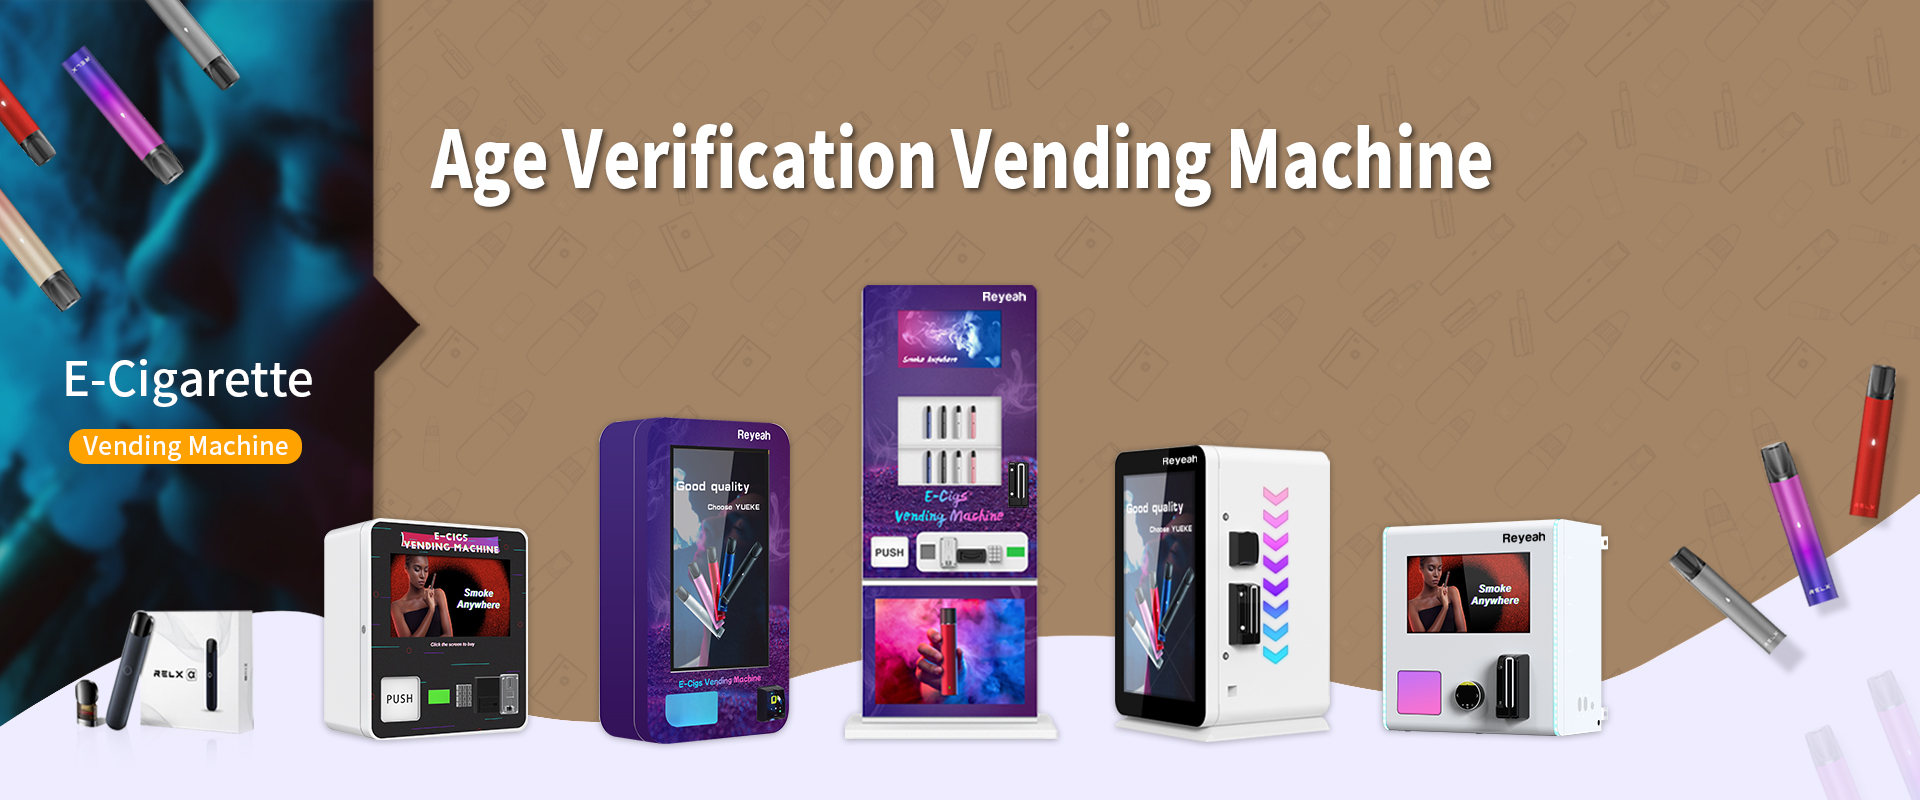 Reyeah Age Verification Vending Machines Solution